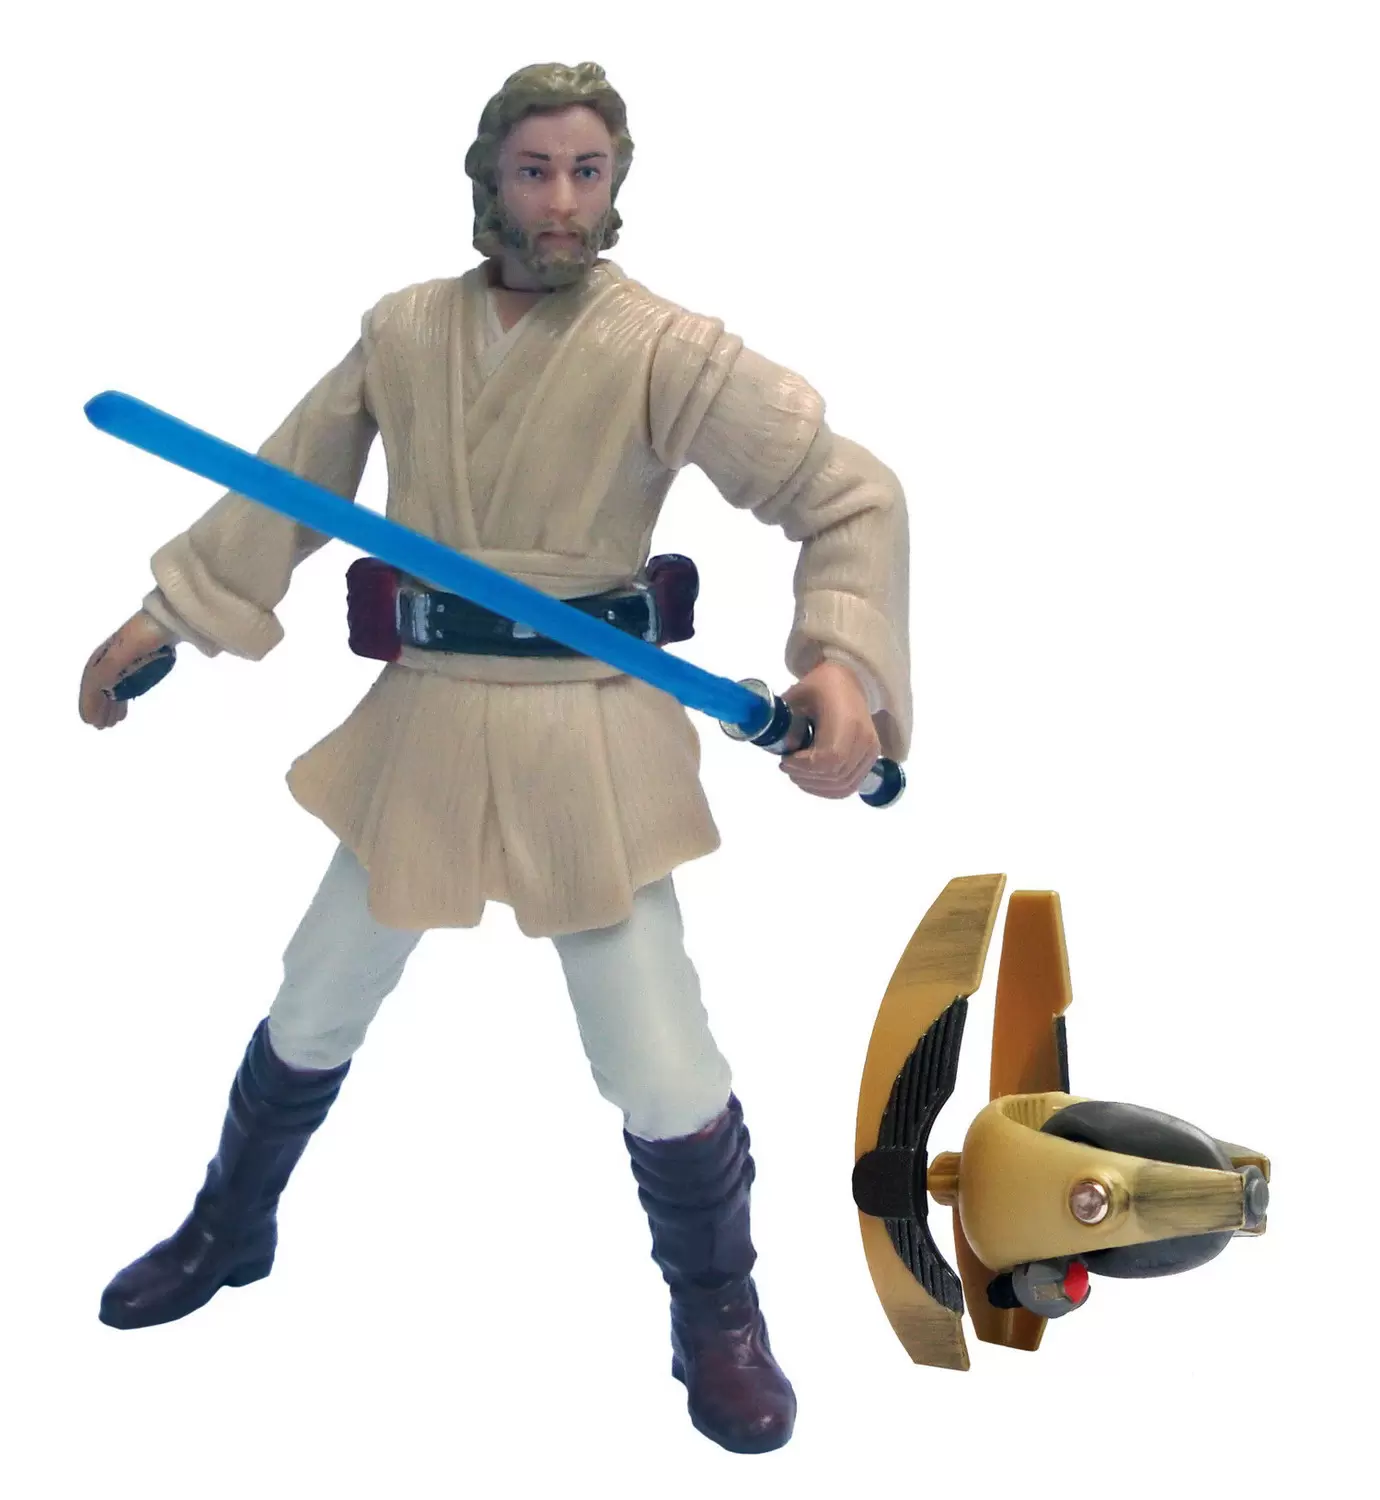 Details about   3.75'' The Clone Wars Saga Obi-Wan Kenobi Action Figures Toys Xmas Gift